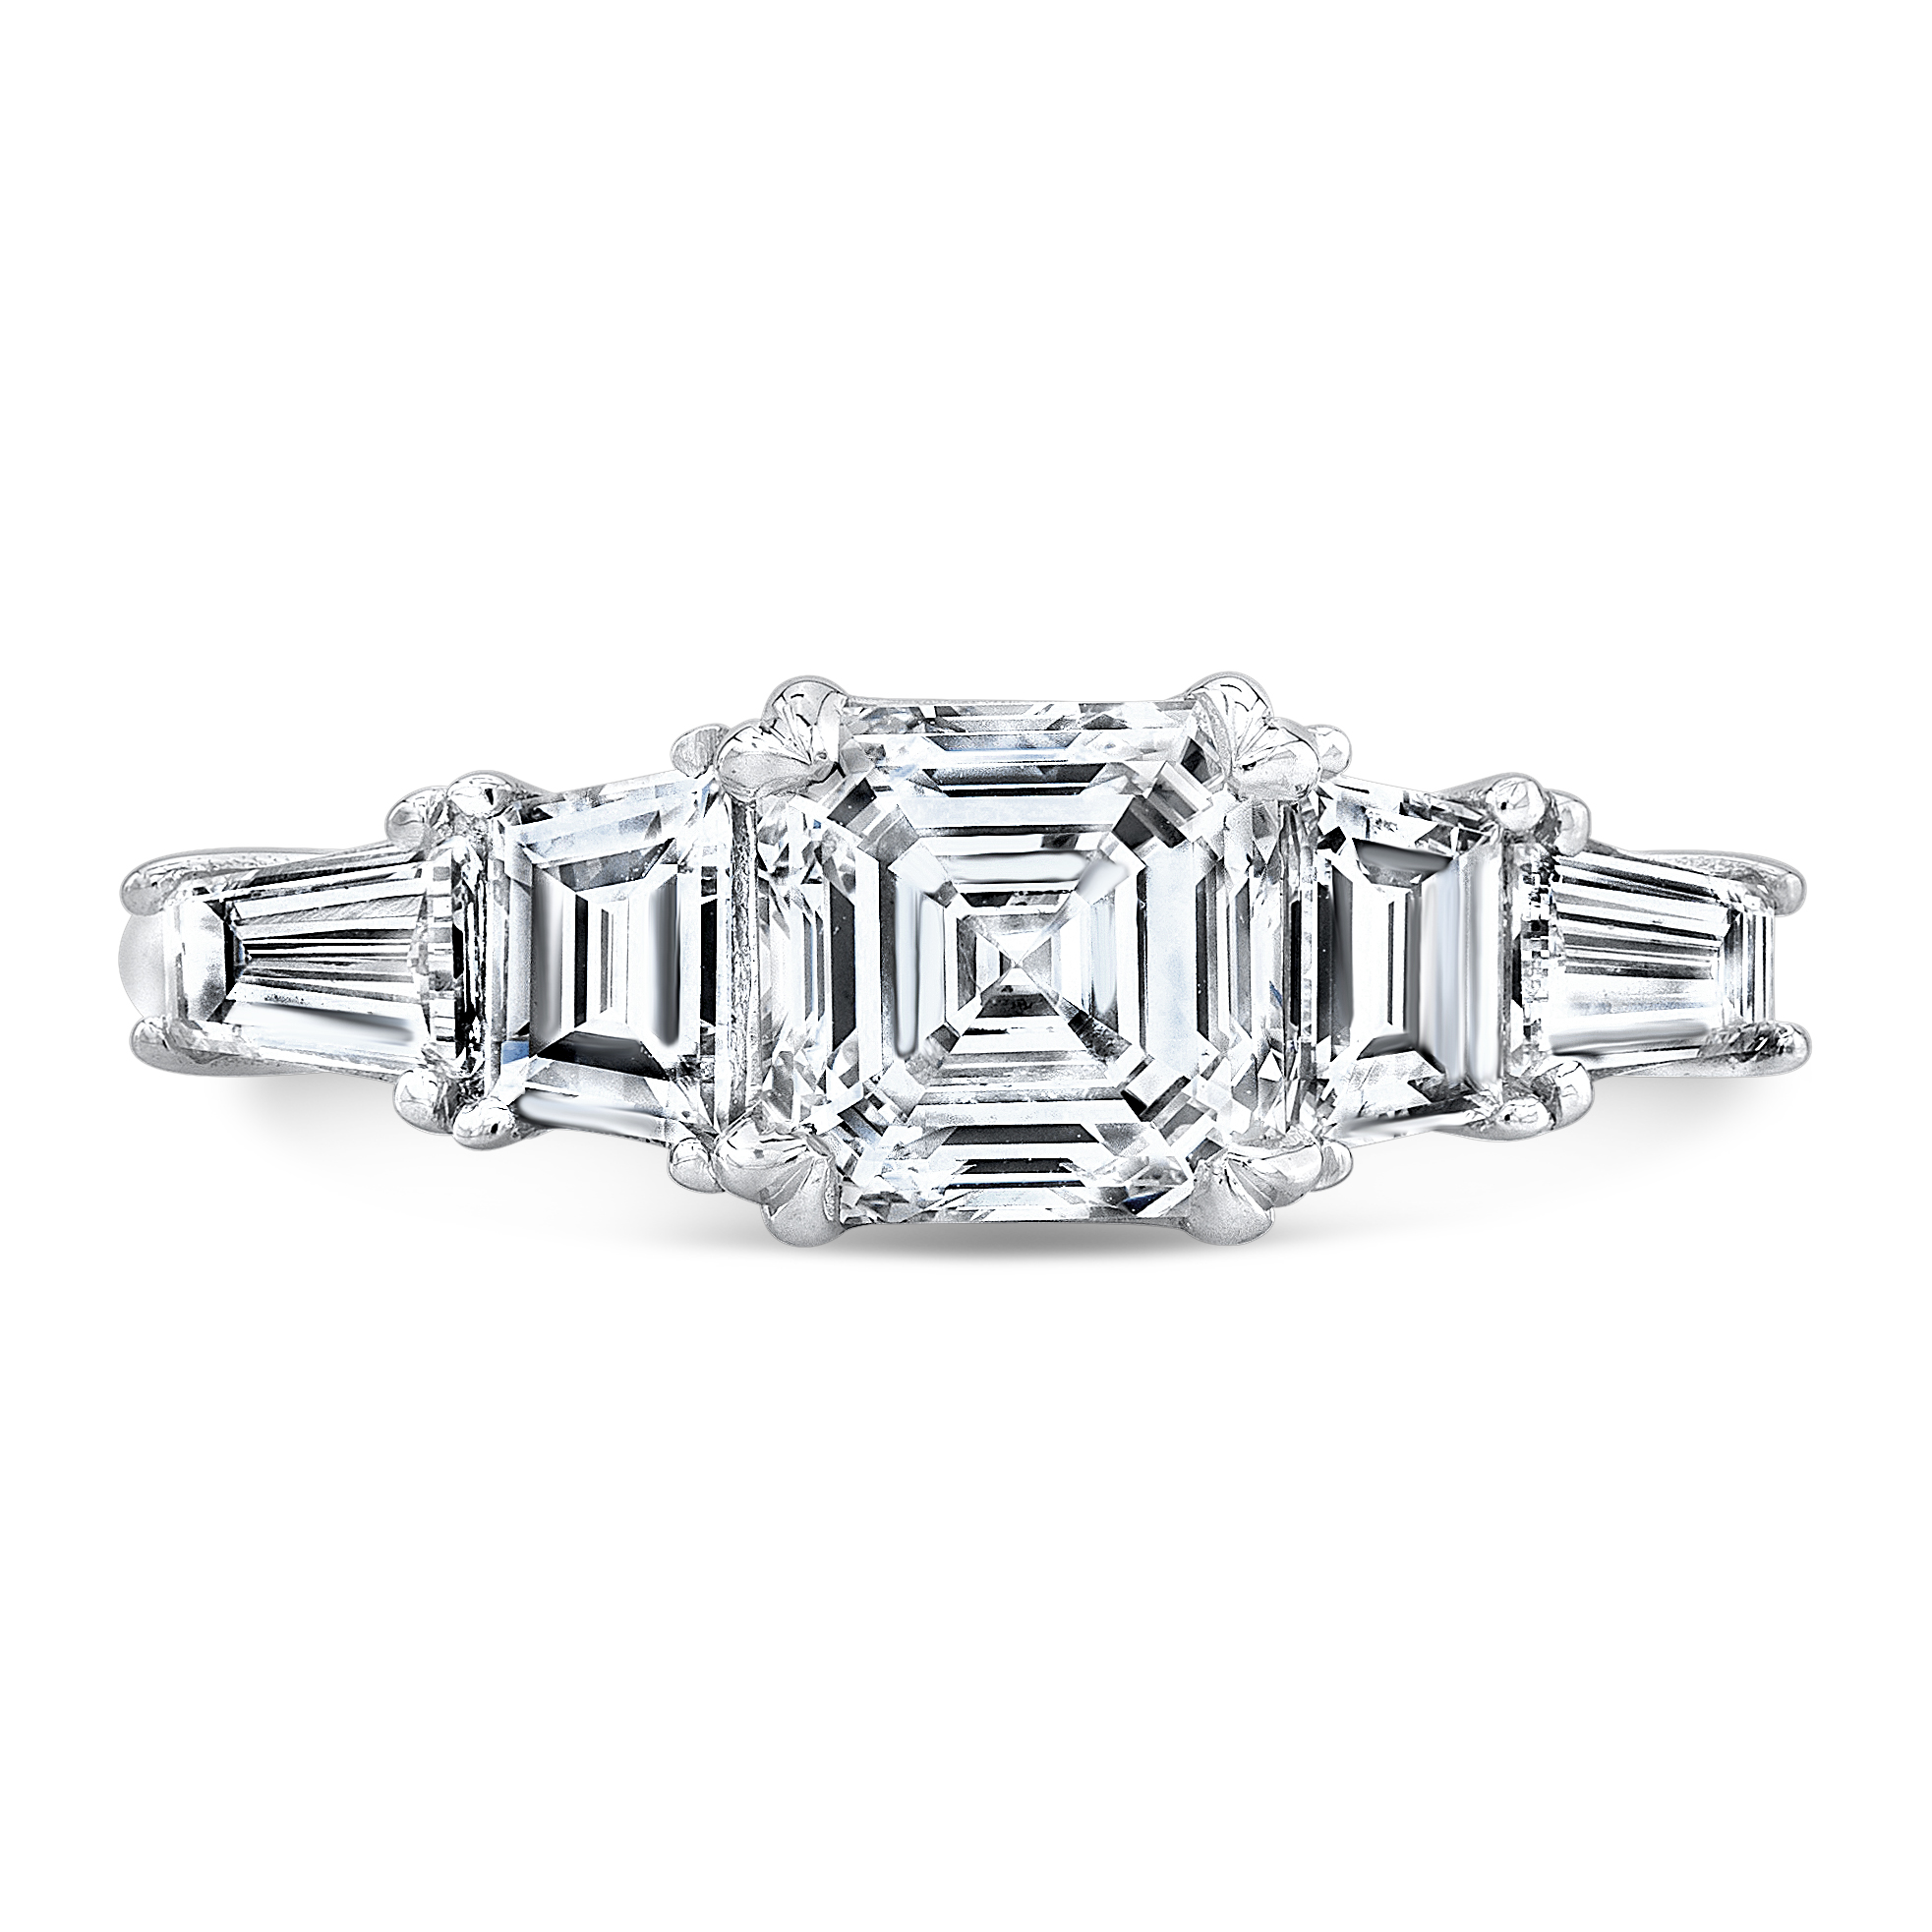 Buy Diamond Engagement Ring, 2 Carat Diamond Asscher Cut Ring, 14k White  Gold Ring, D VS2 Natural Diamond Ring, Certified Diamond, Asscher Cut  Online in India - Etsy